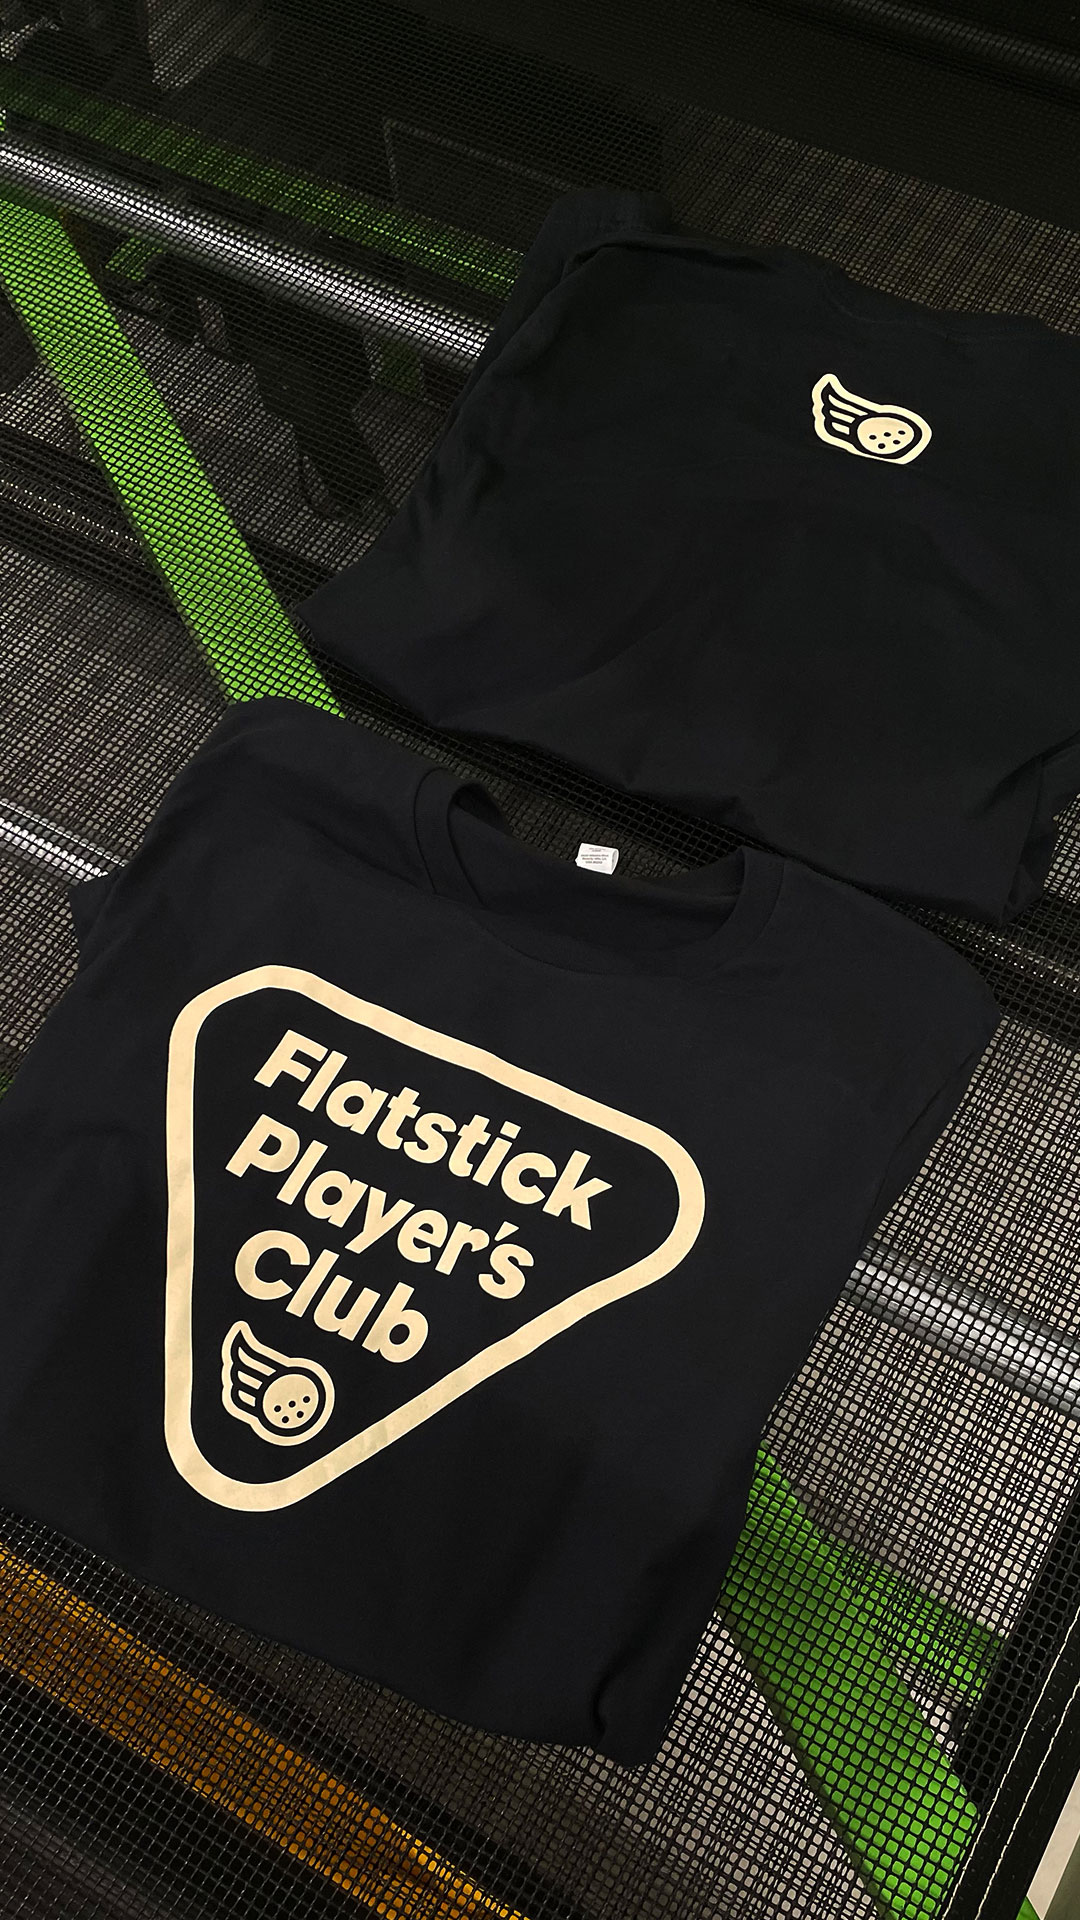 Flatstick Players Club 1